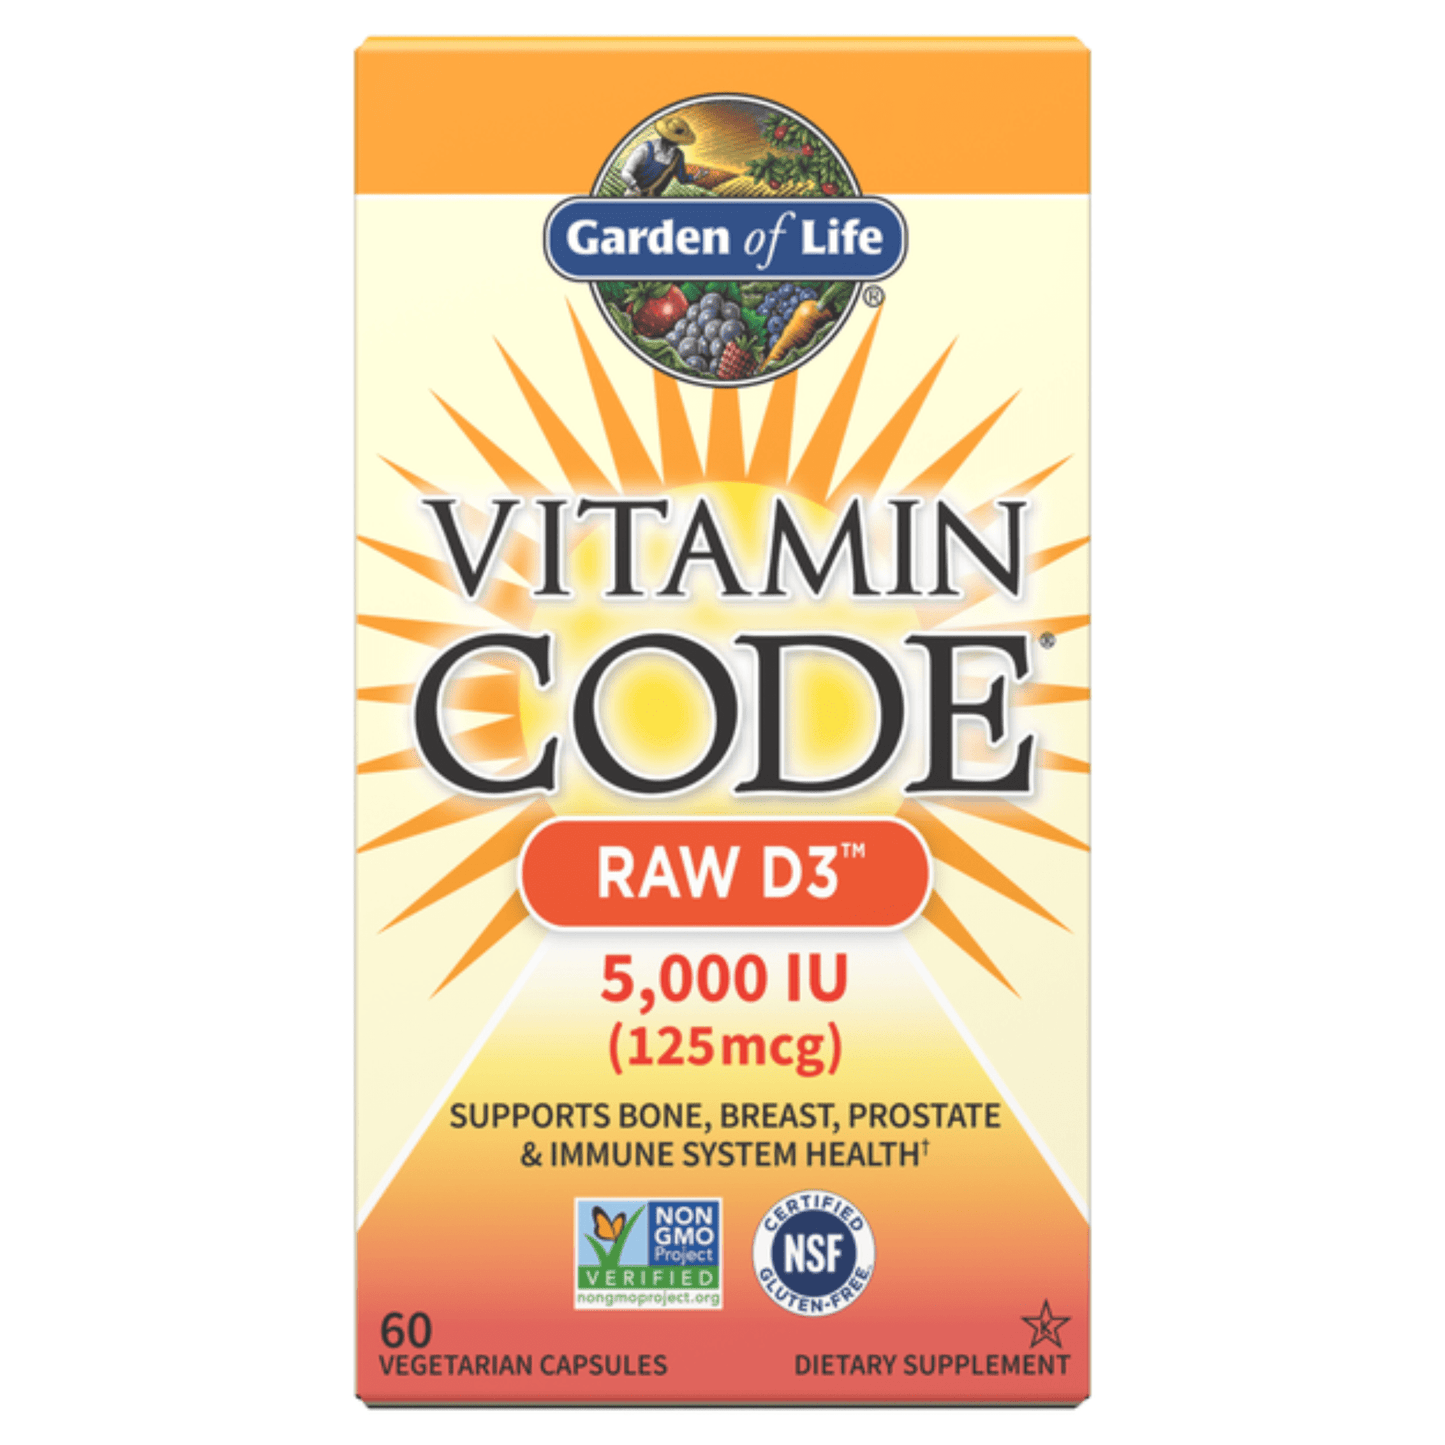 Primary Image of Vitamin Code Raw D3 5000IU